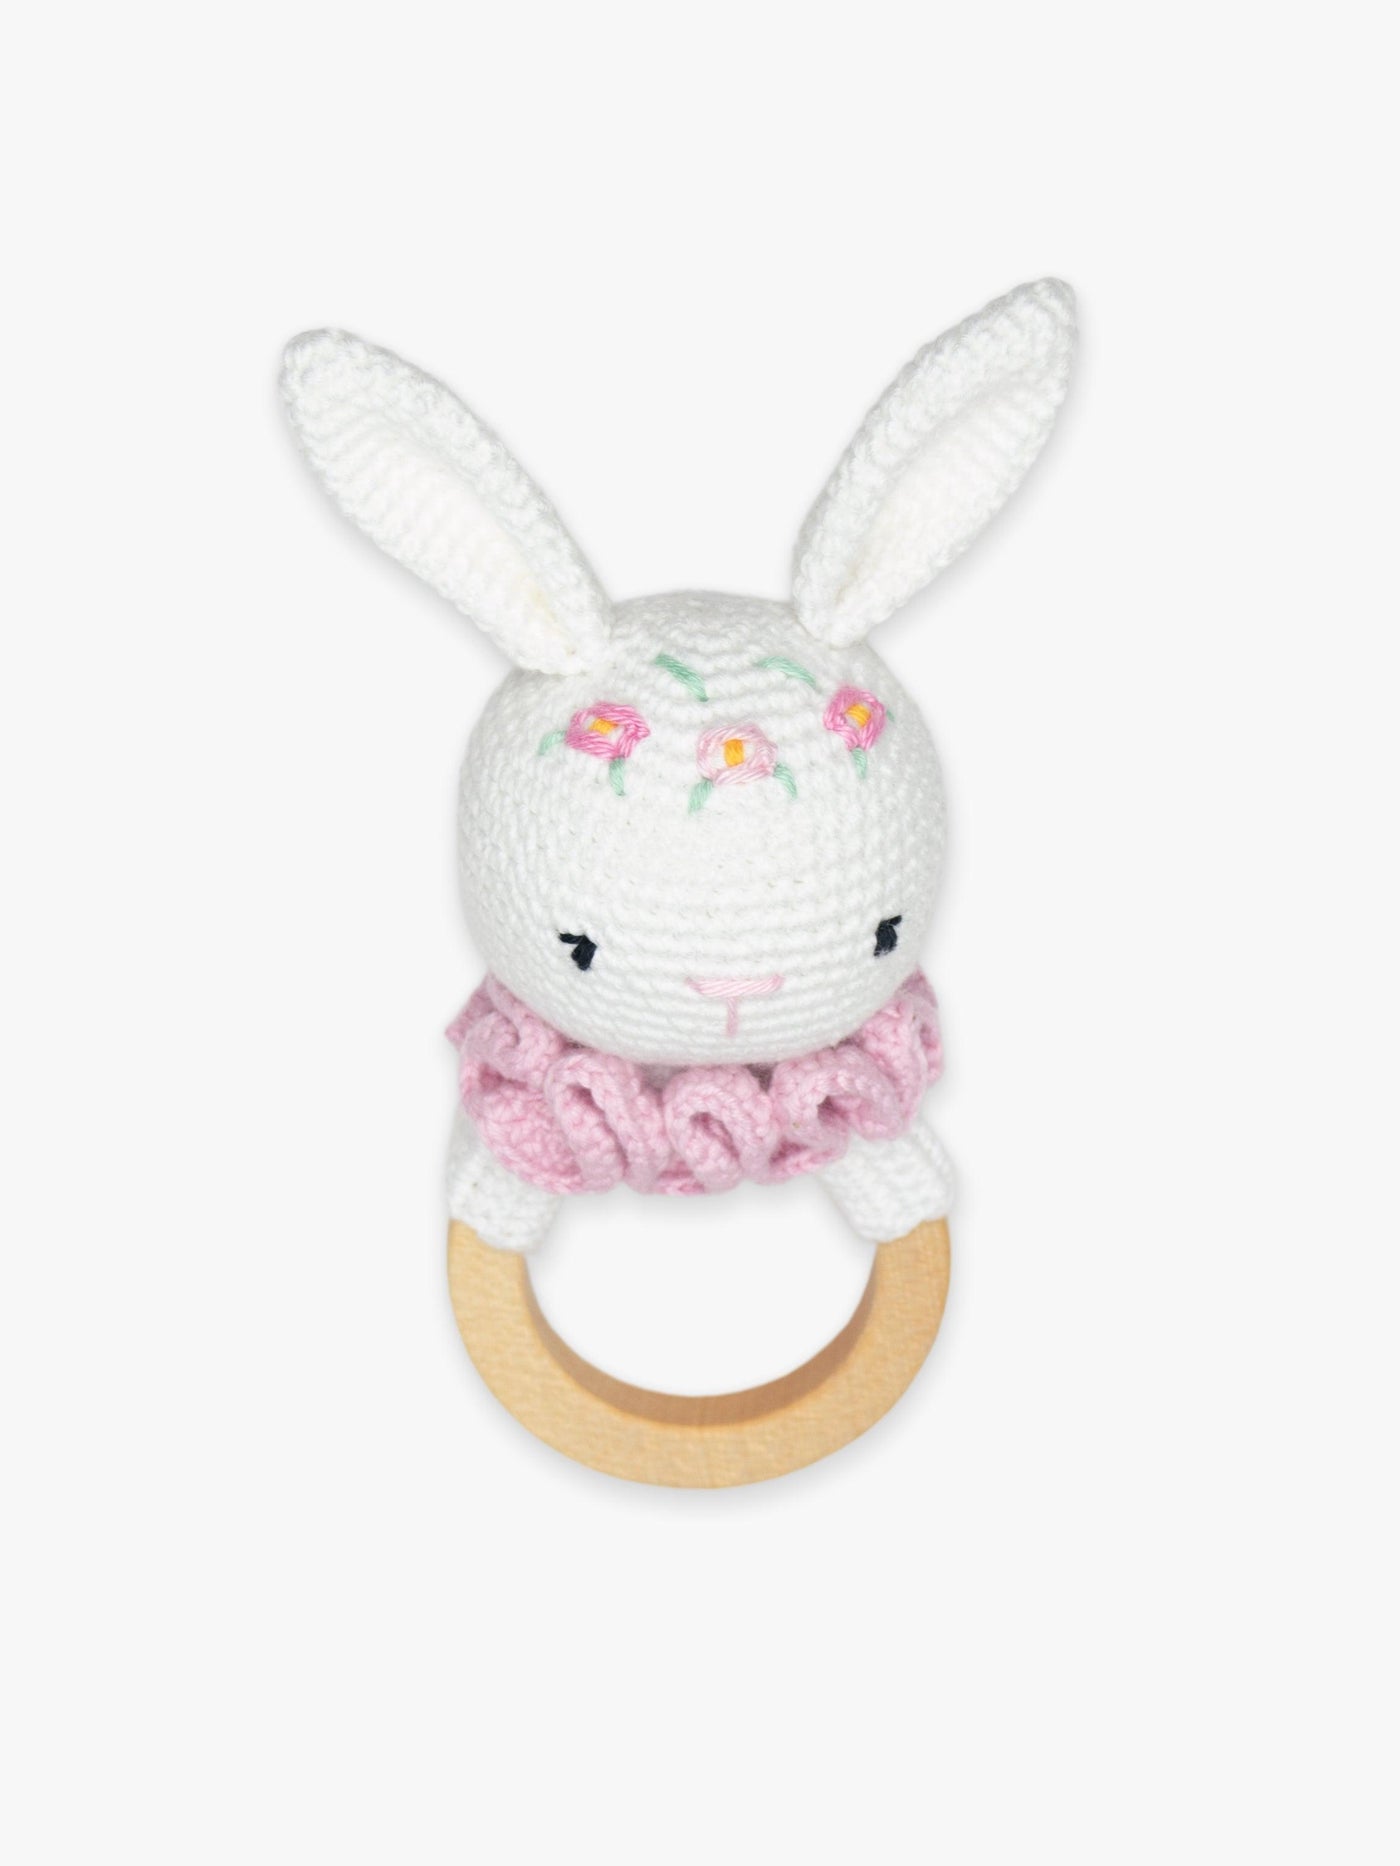 Crochet Rattle / Elina the bunny (teether style) by Little Moy - Vysn